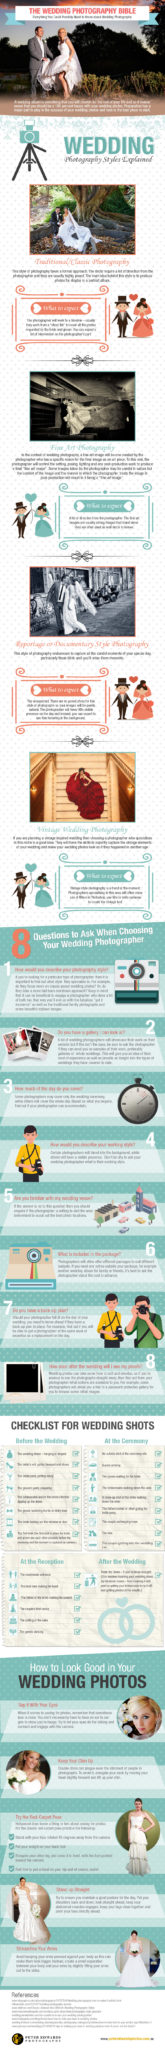 Wedding-photography-Bible-Infographic